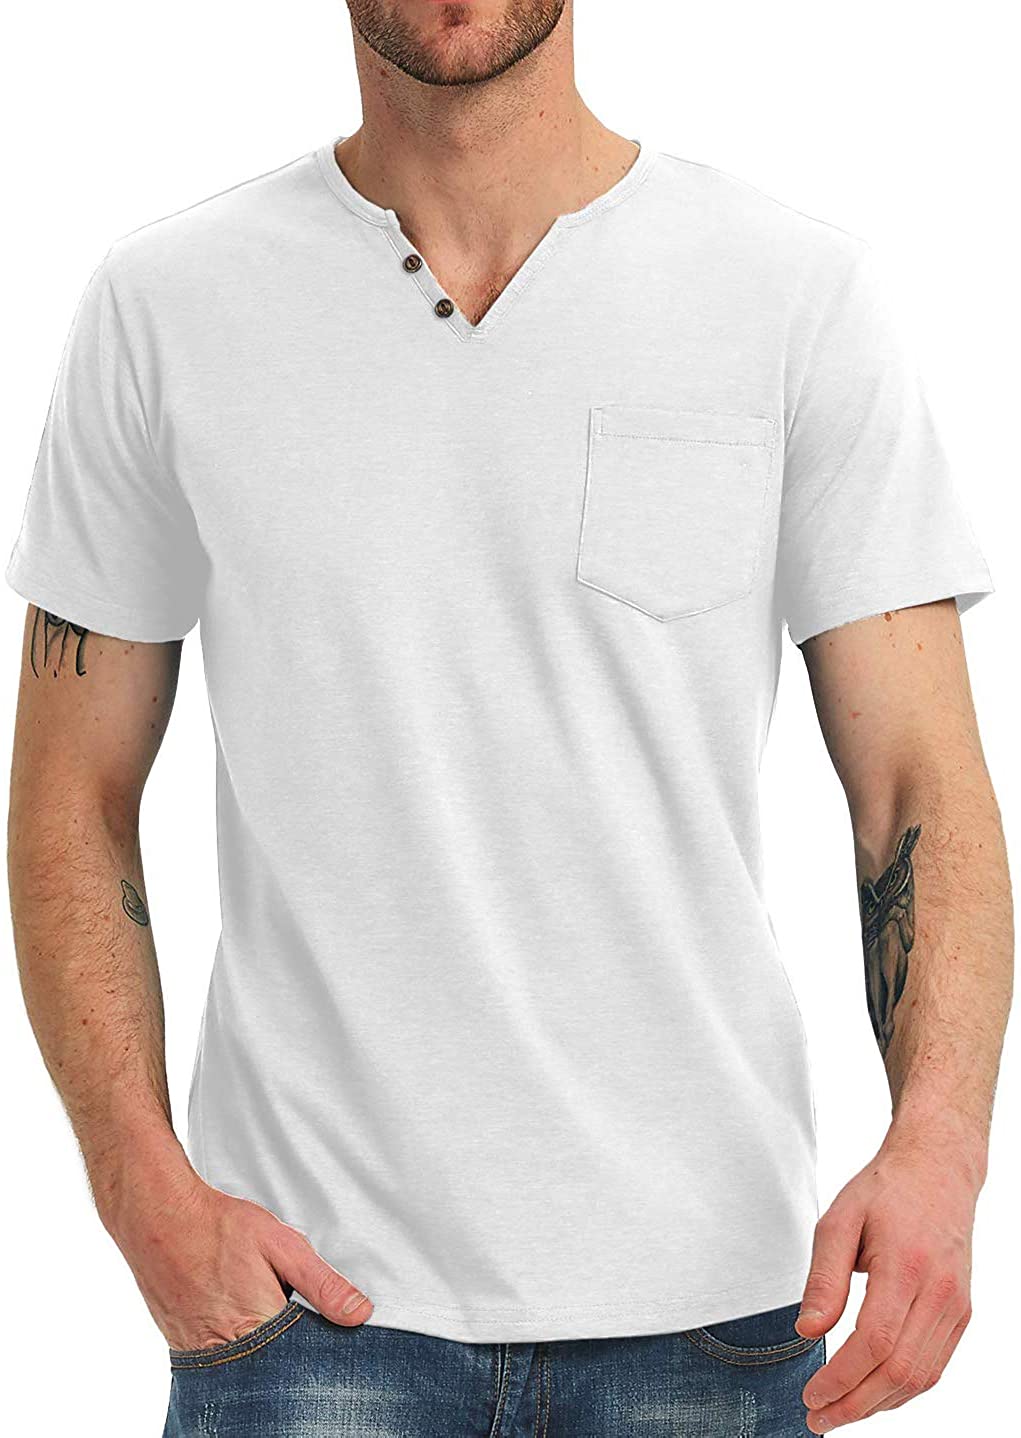 NITAGUT Men's Casual Slim Fit Long/Short Sleeve Pocket T-Shirts Cotton V Neck Tops 